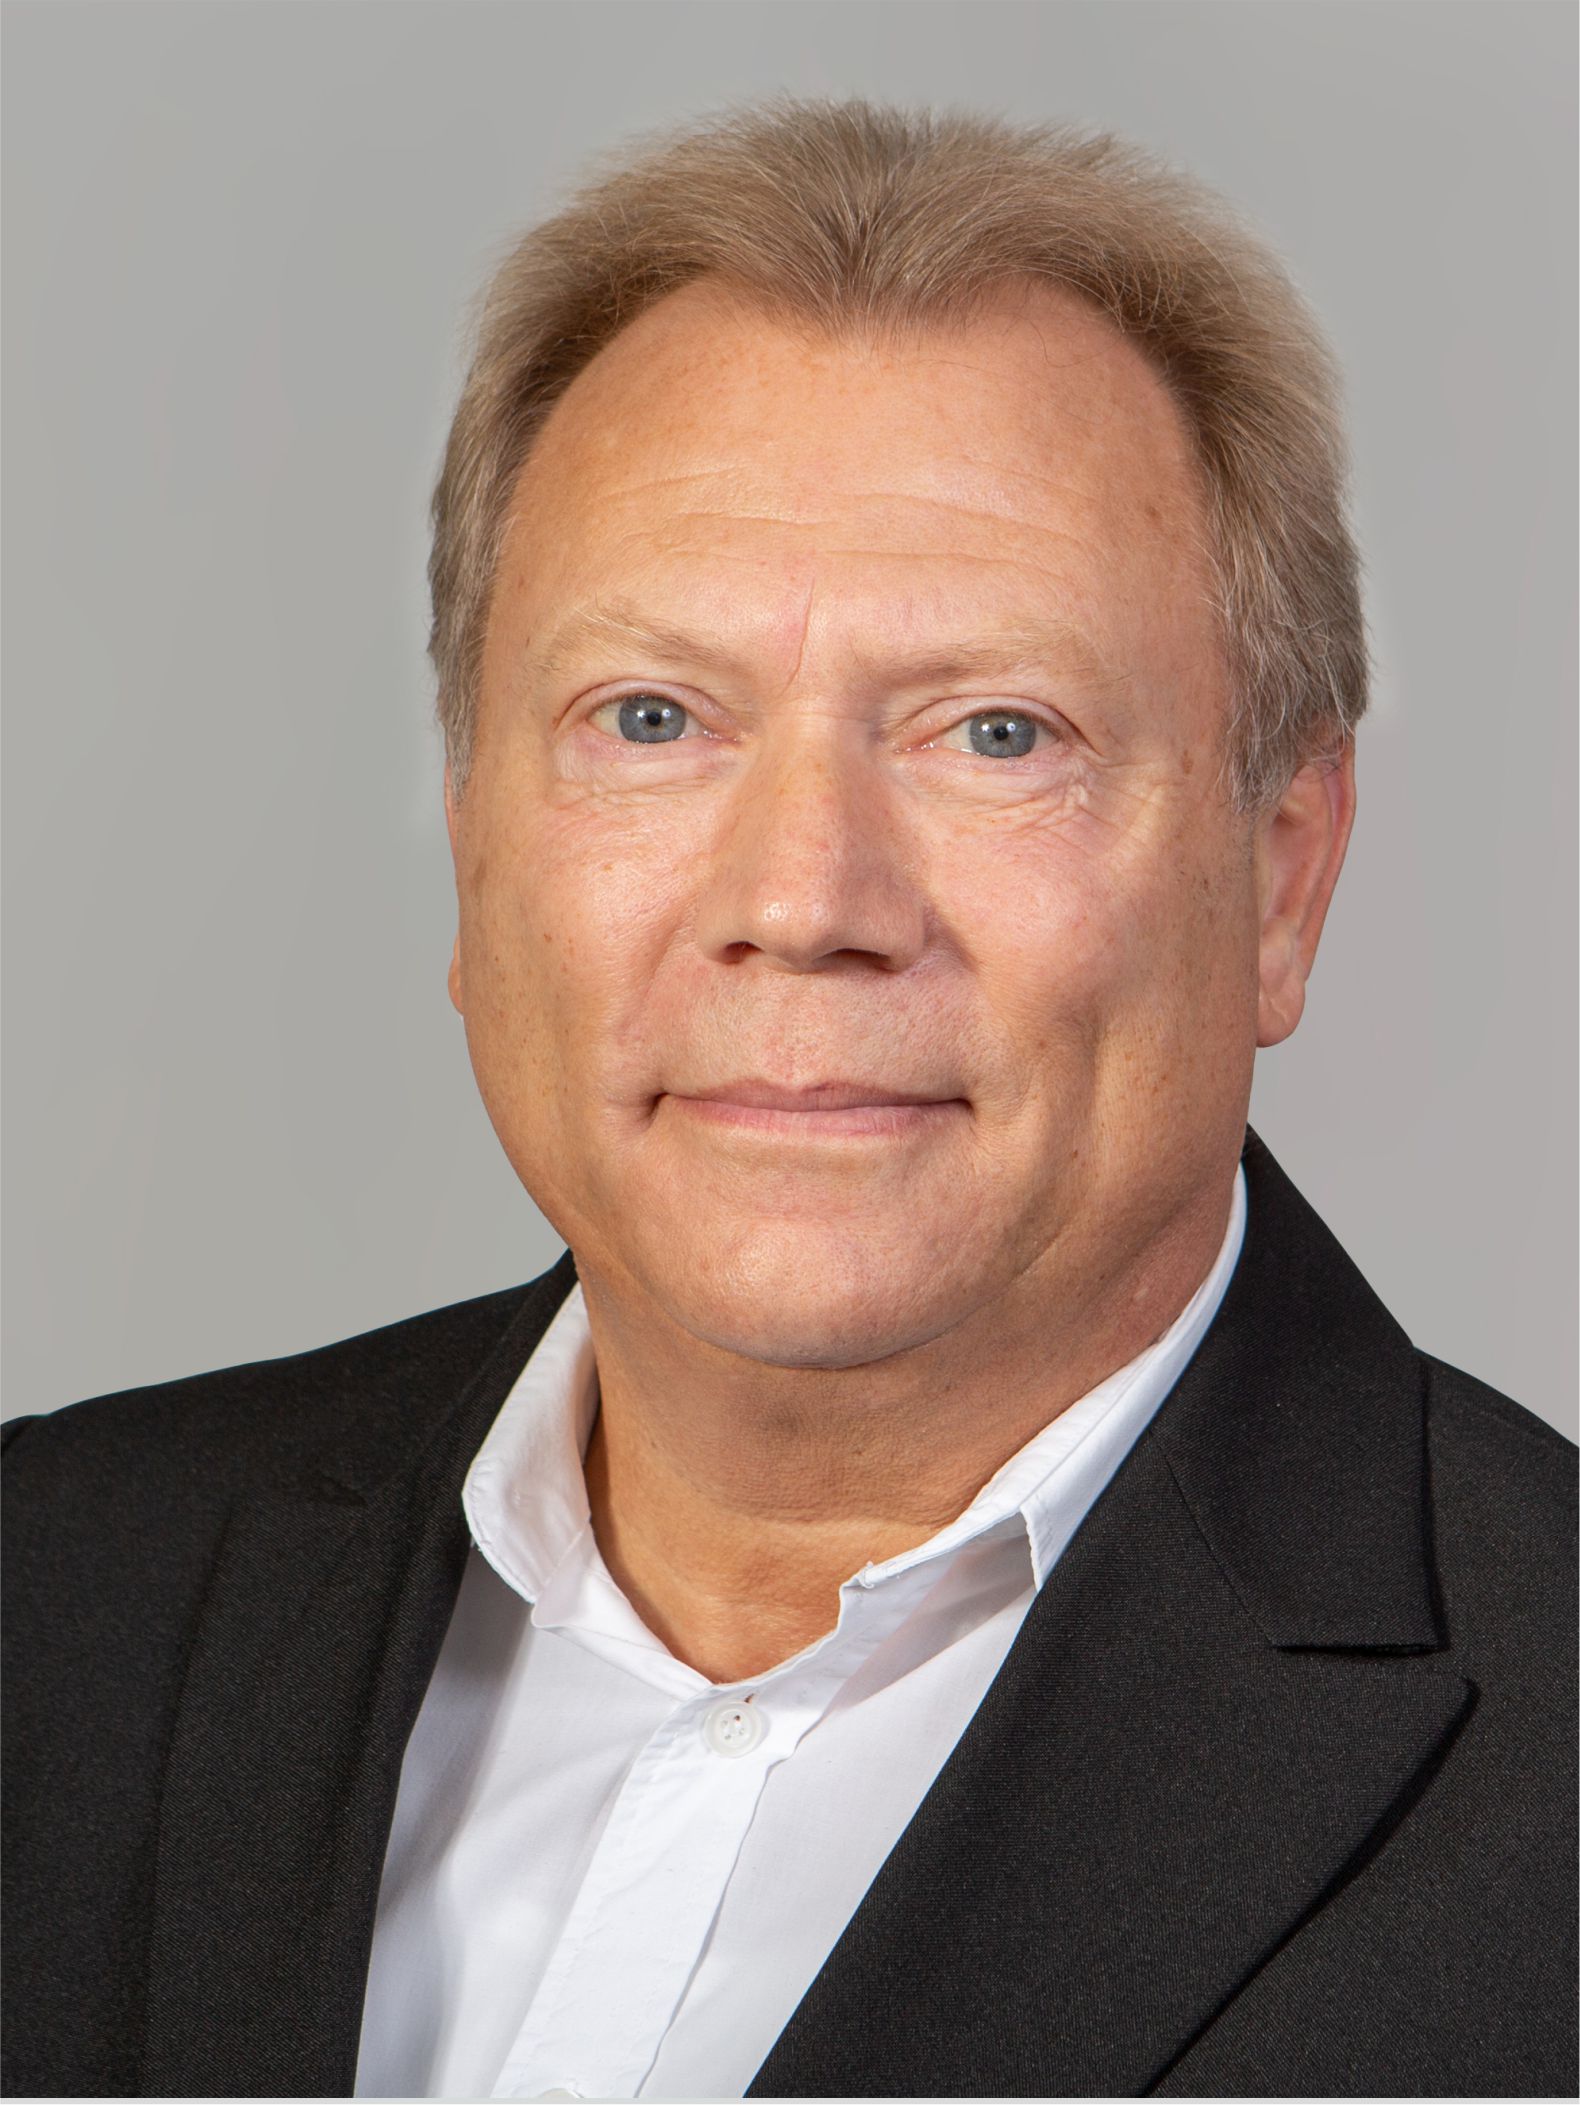 Frank Jänichen